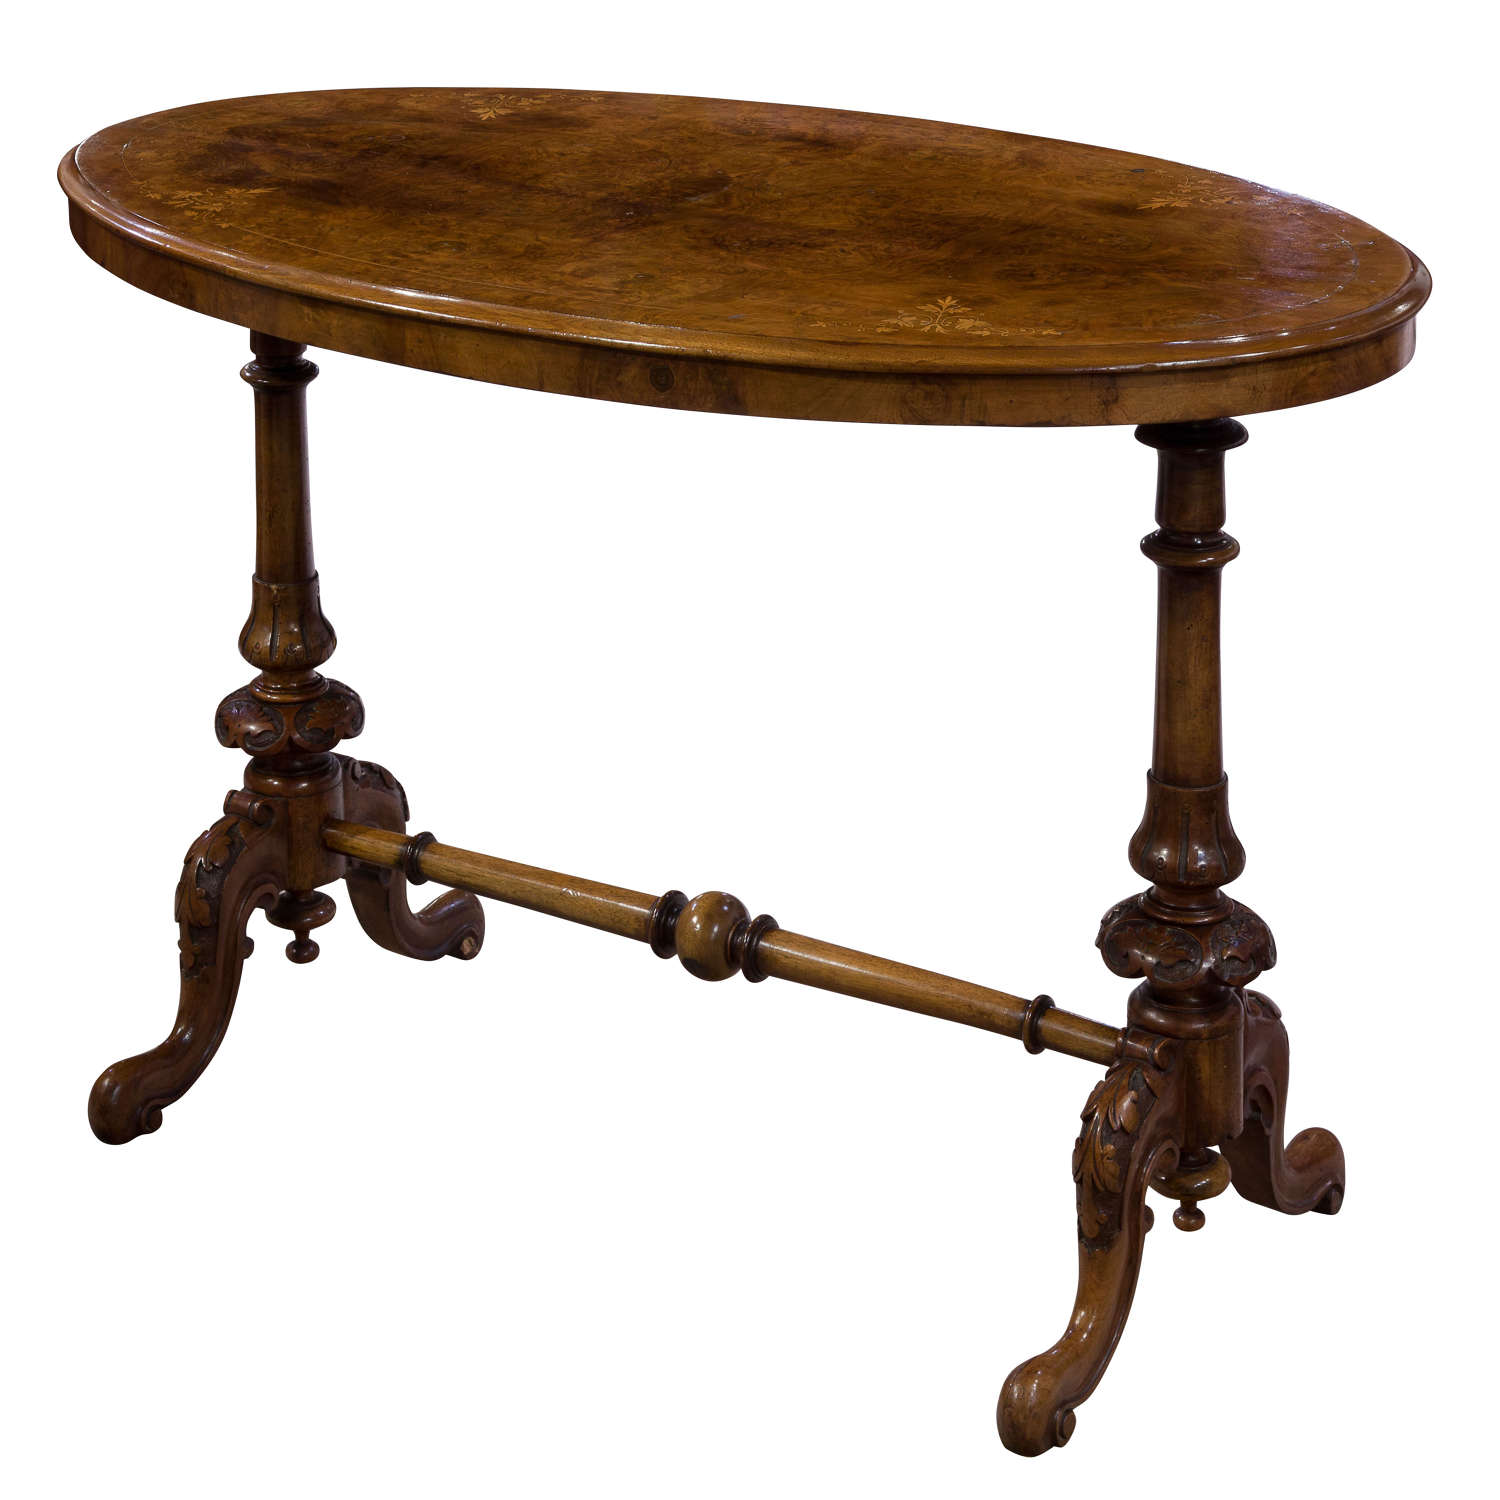 A Victorian Oval Inlaid Walnut Stretcher Table